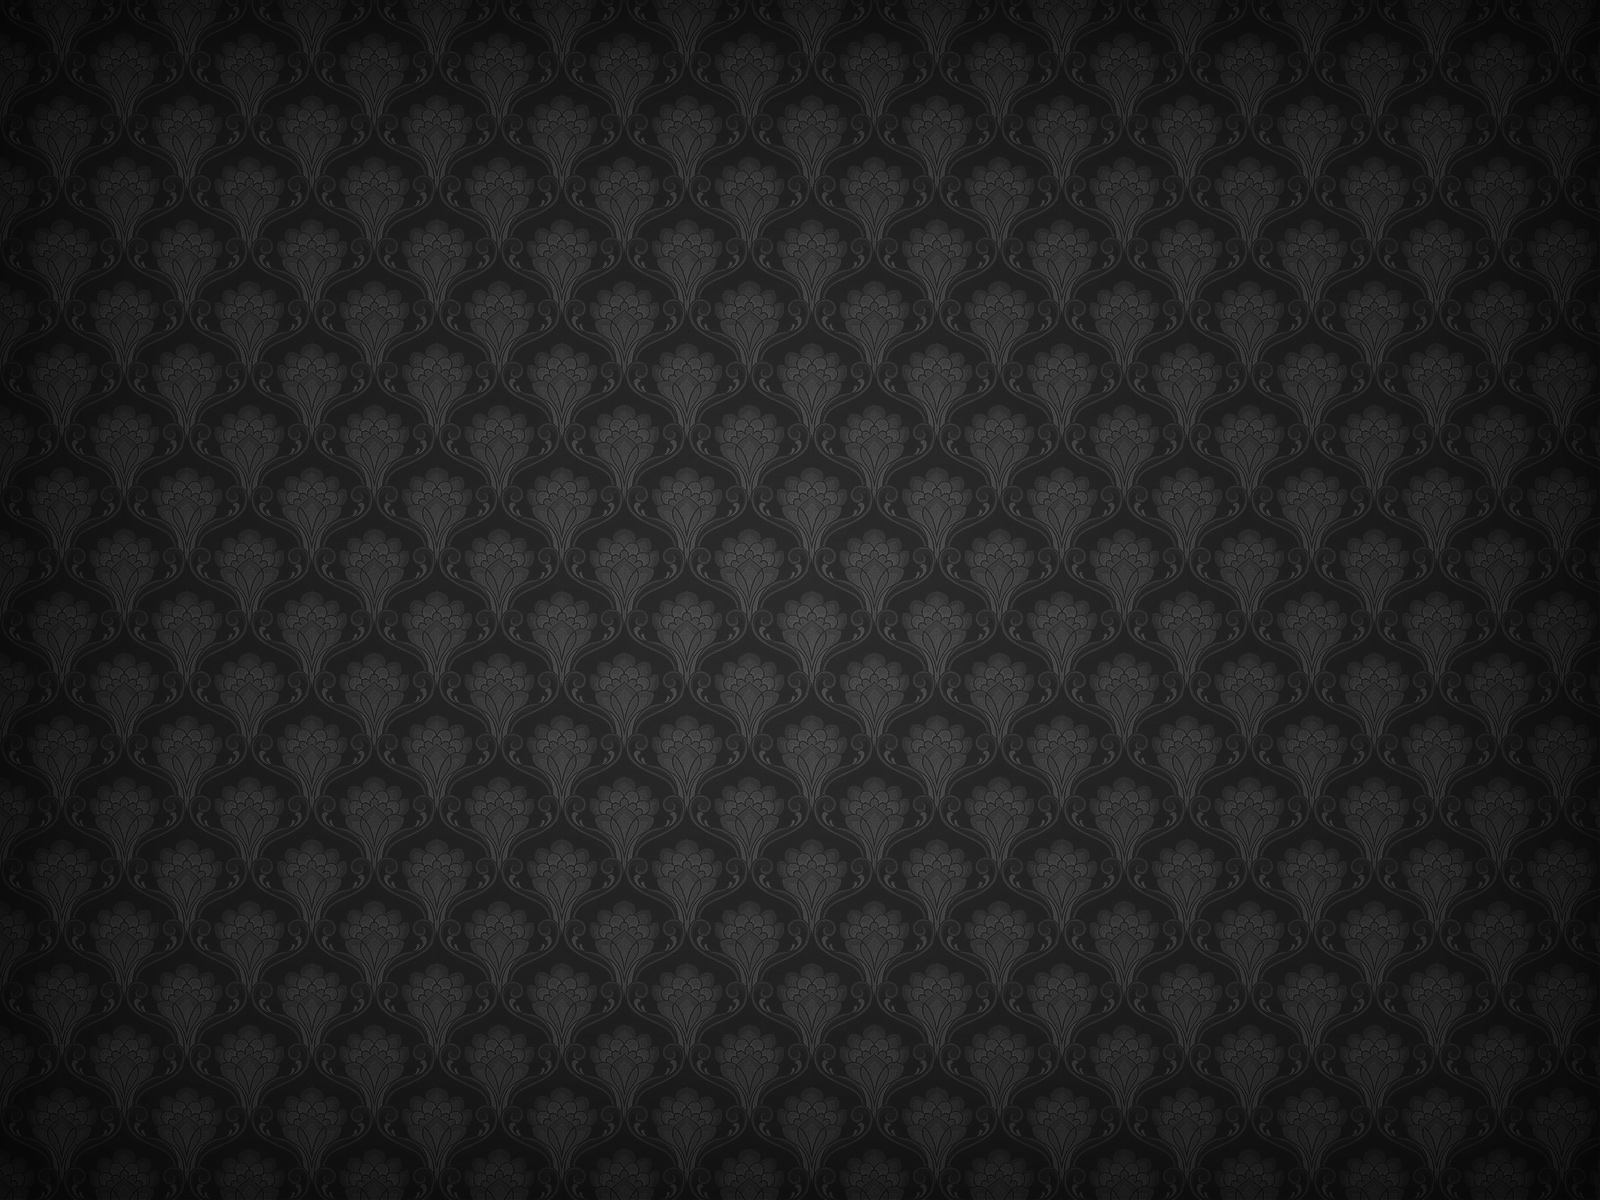 https://blogger.googleusercontent.com/img/b/R29vZ2xl/AVvXsEgKLoBQ5jI4wG30qcr0vgpYLh7LrLVPpXOI9WtaTxDopfYCtzdYjo790BsRYXiq695DMASCPWgYqWjTUkcGY5ck7PwE9cLlyfGyILLukttun8_5HUDp3kagdw9Nv4JMR6_nU91YKMEIBZY/s1600/floral-pattern-wallpaper-black-1600x1200.jpg